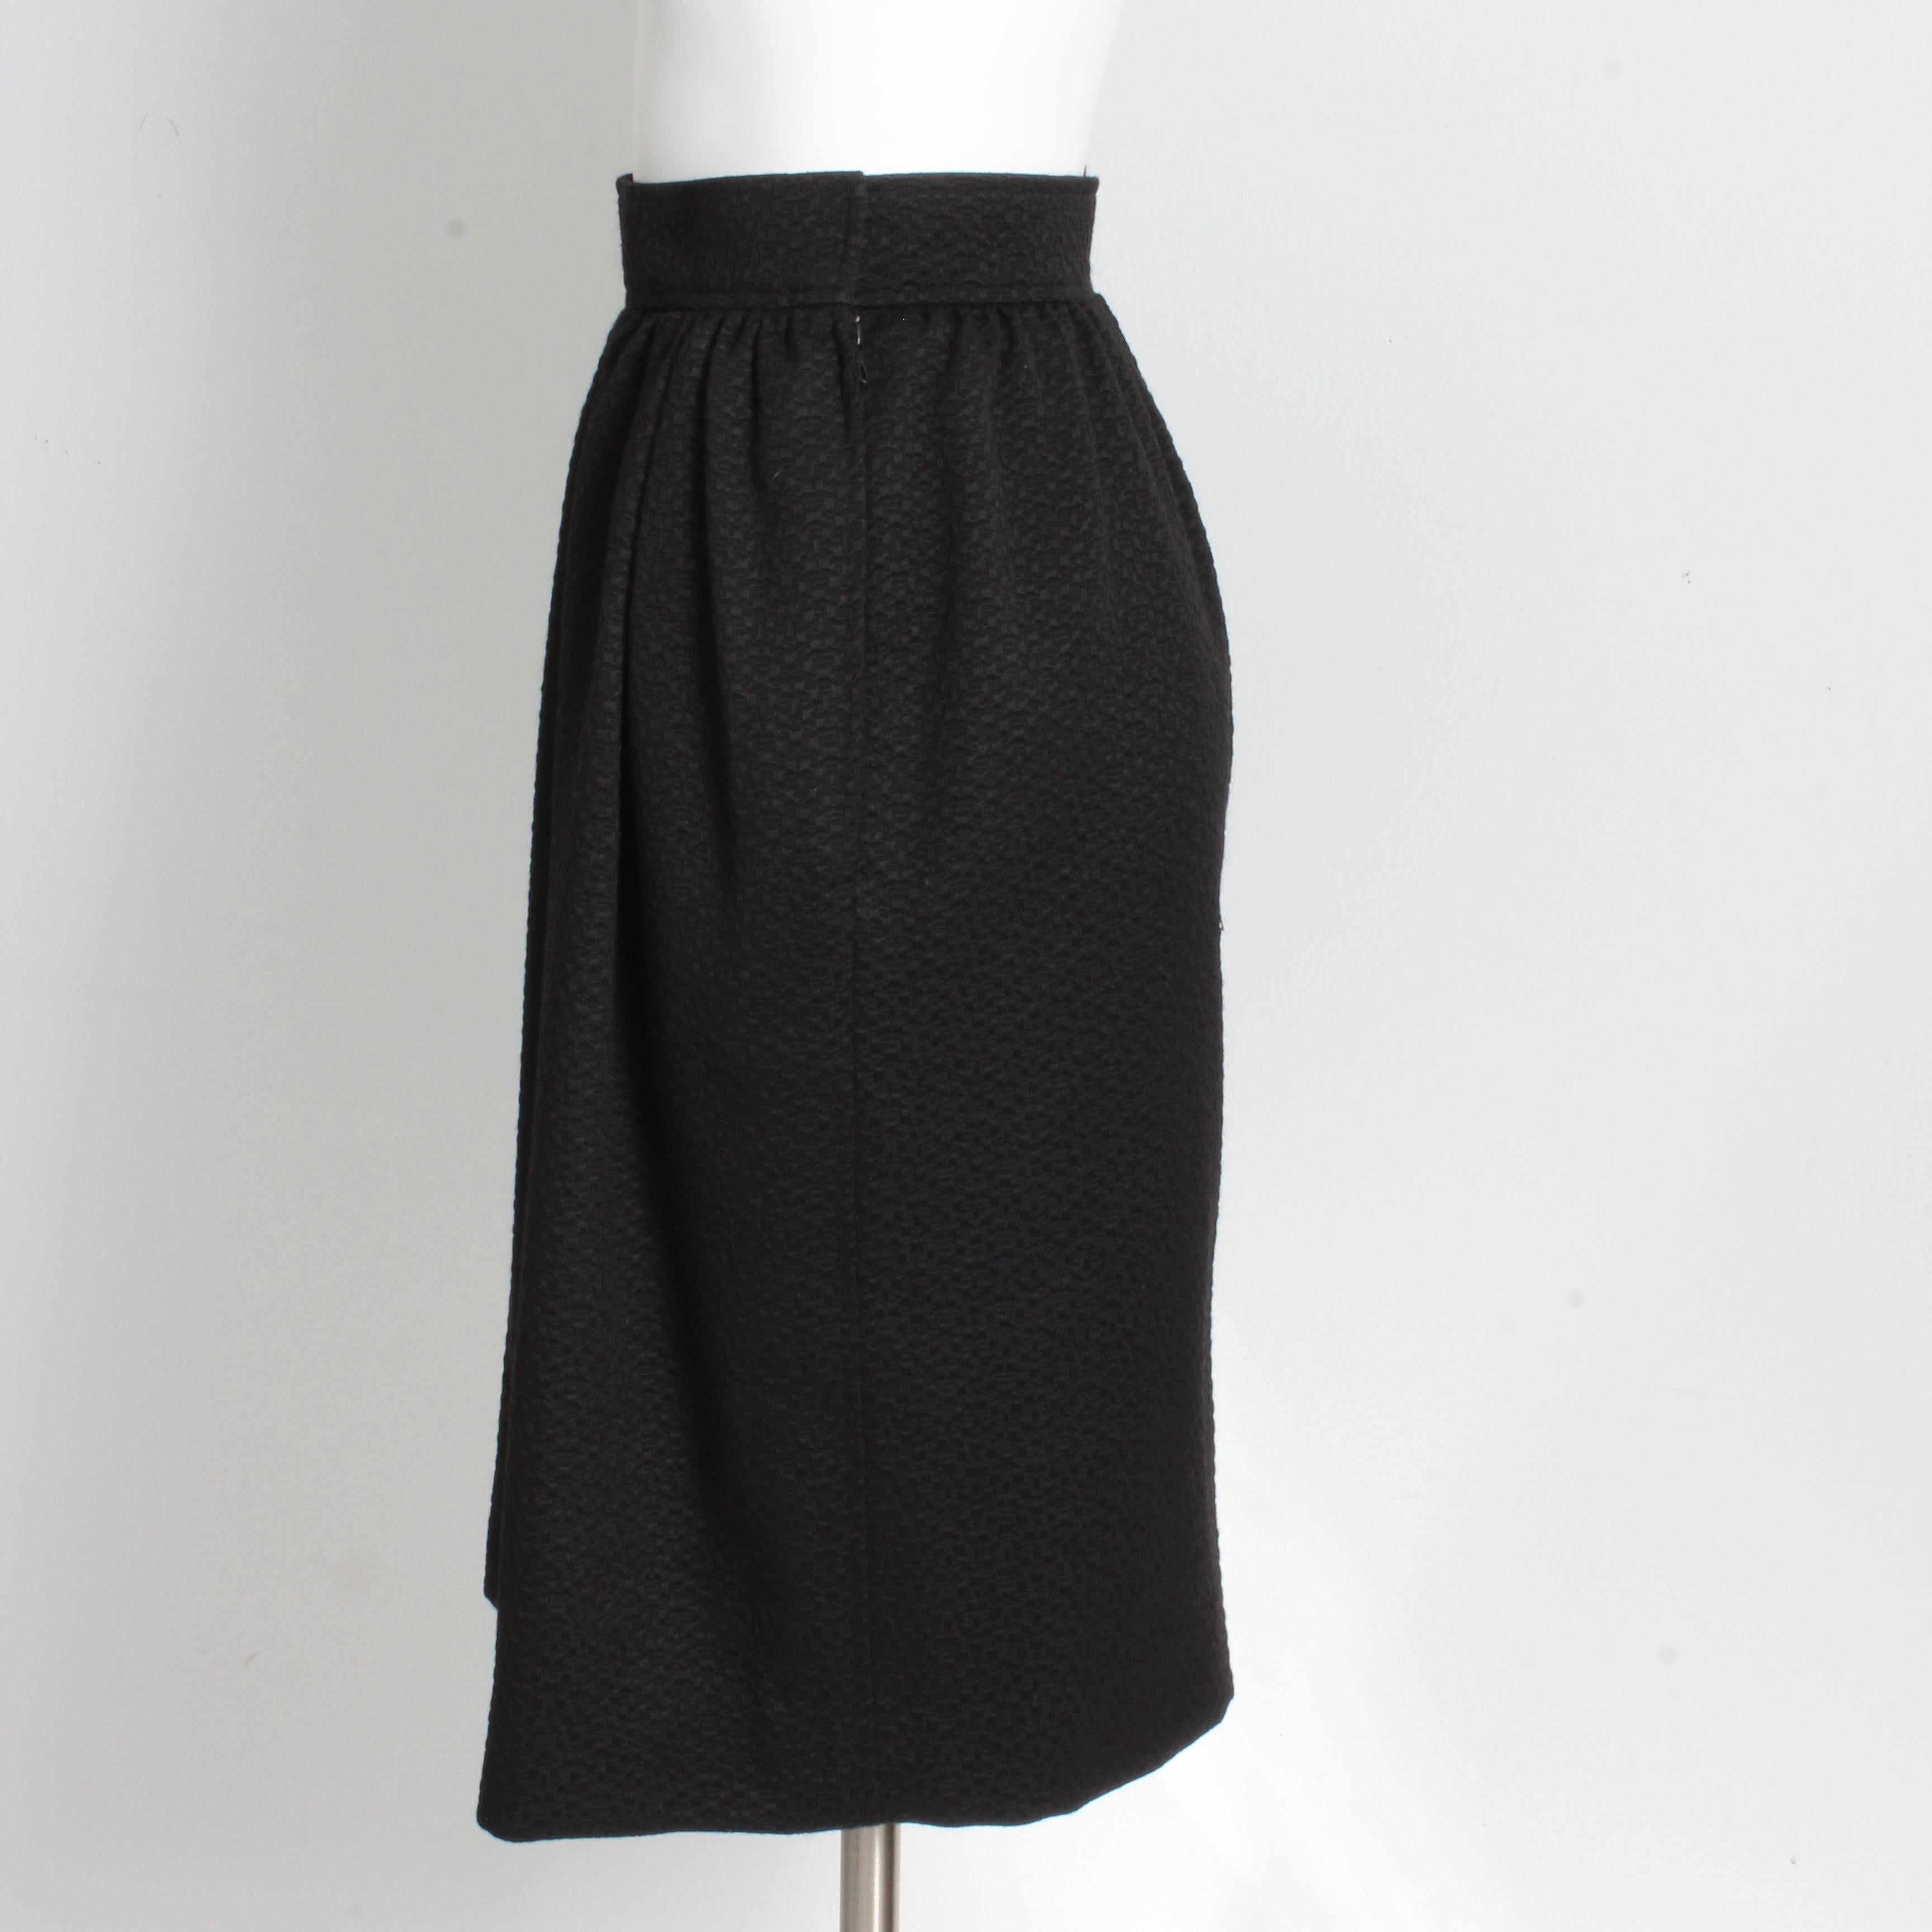 Yves Saint Laurent Skirt Pencil Black Textured Knit YSL Rive Gauche Size 38 90s For Sale 3